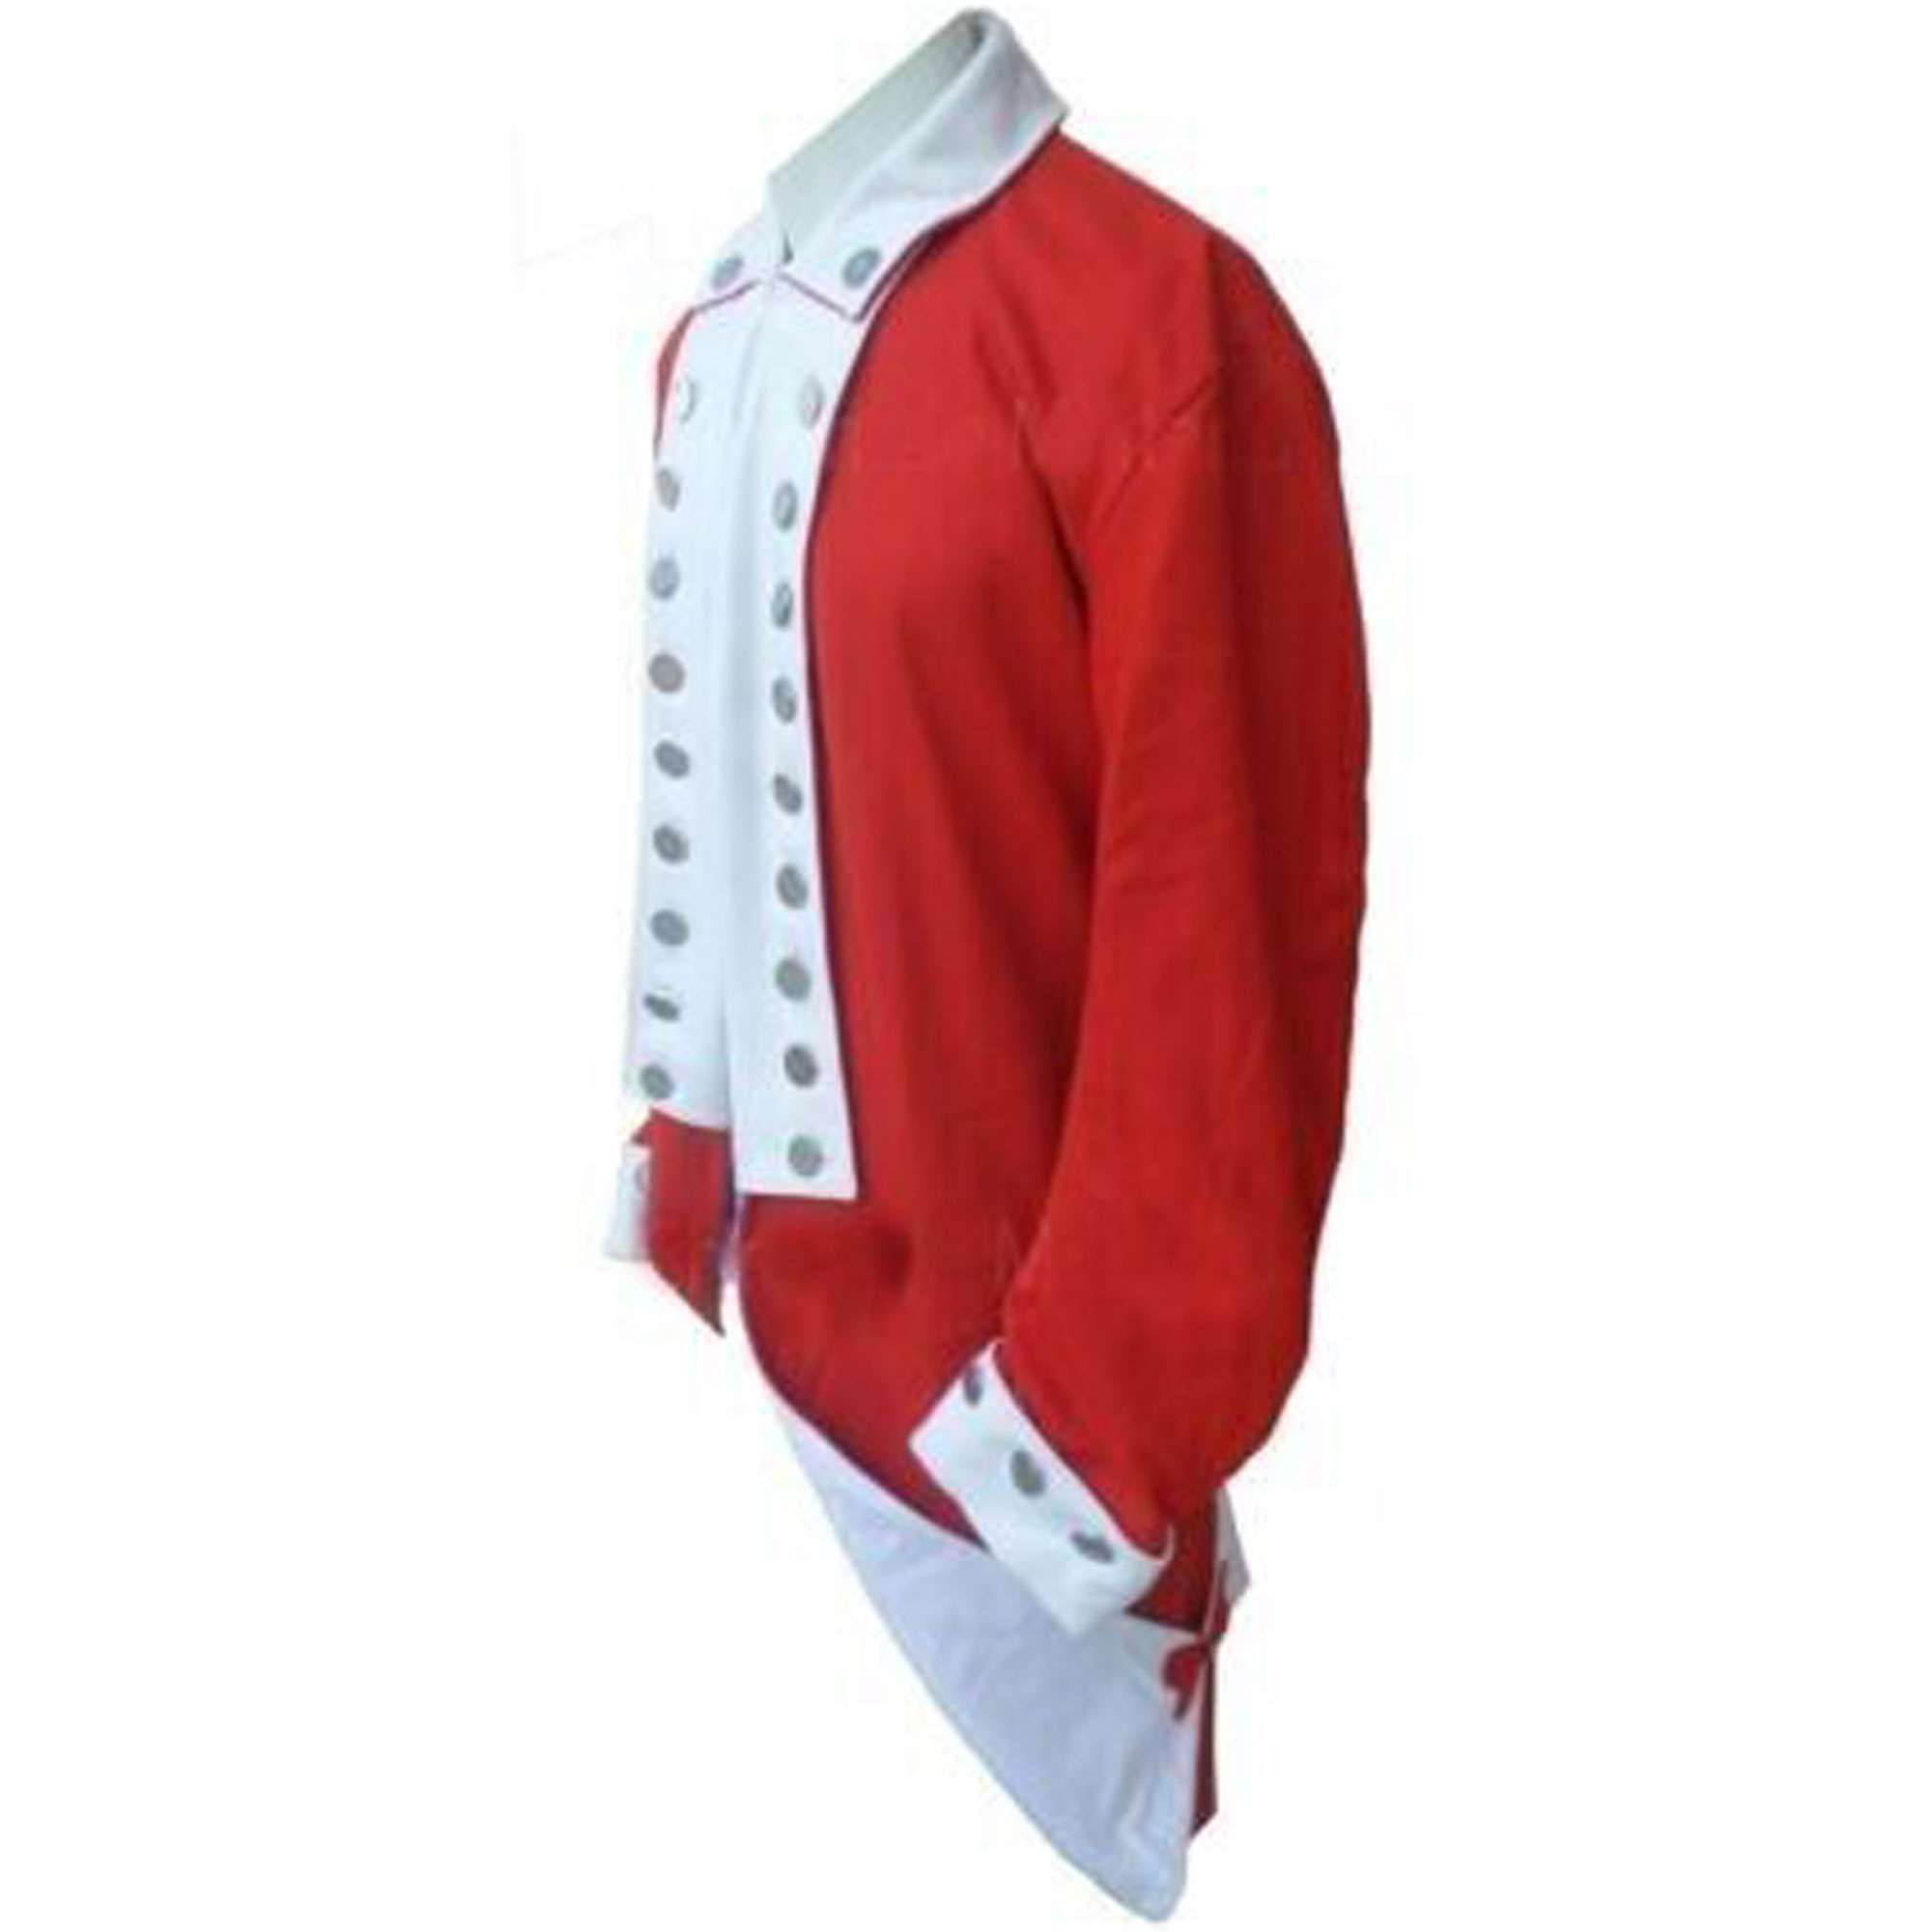 New Royal British Marine Revolutionary War Coat Men Red Wool Jacket - 511